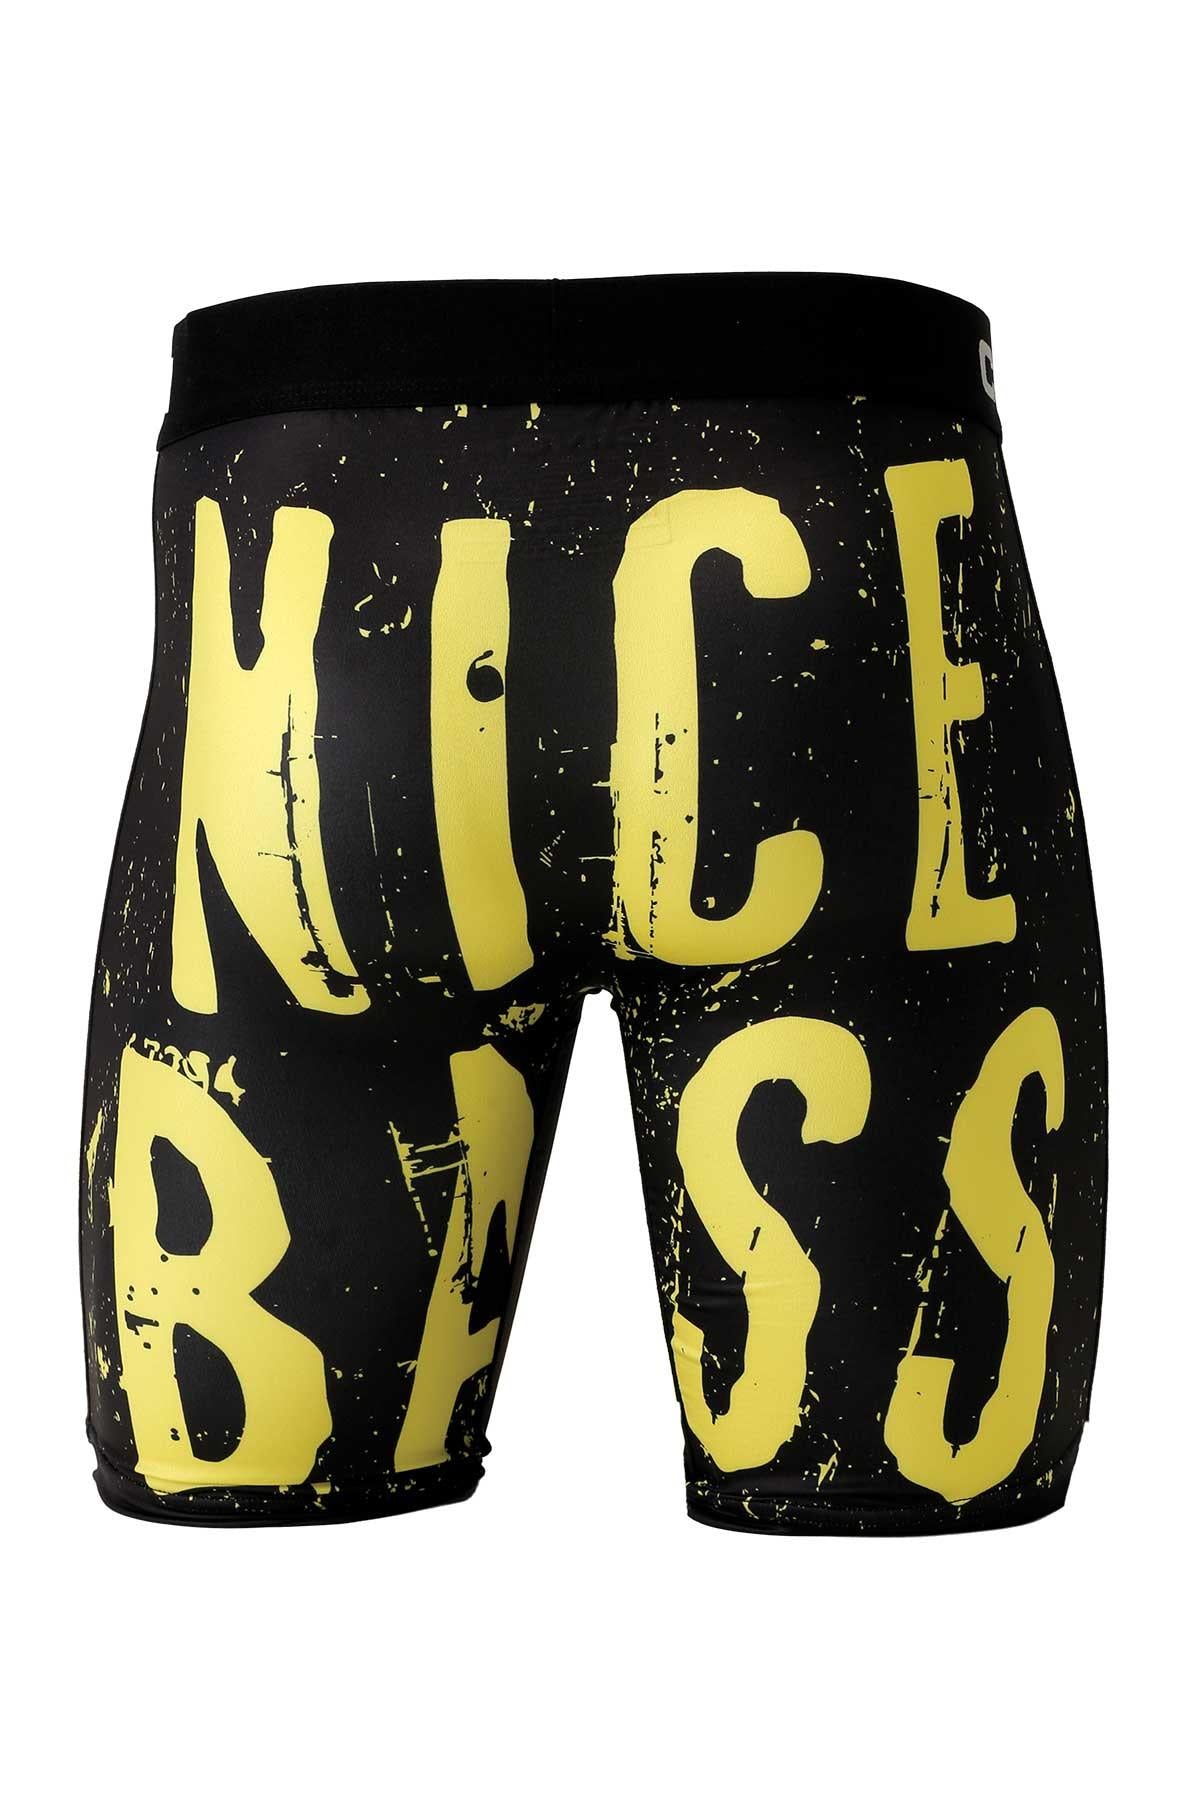 Men's Boxer Shorts - Nice Bass